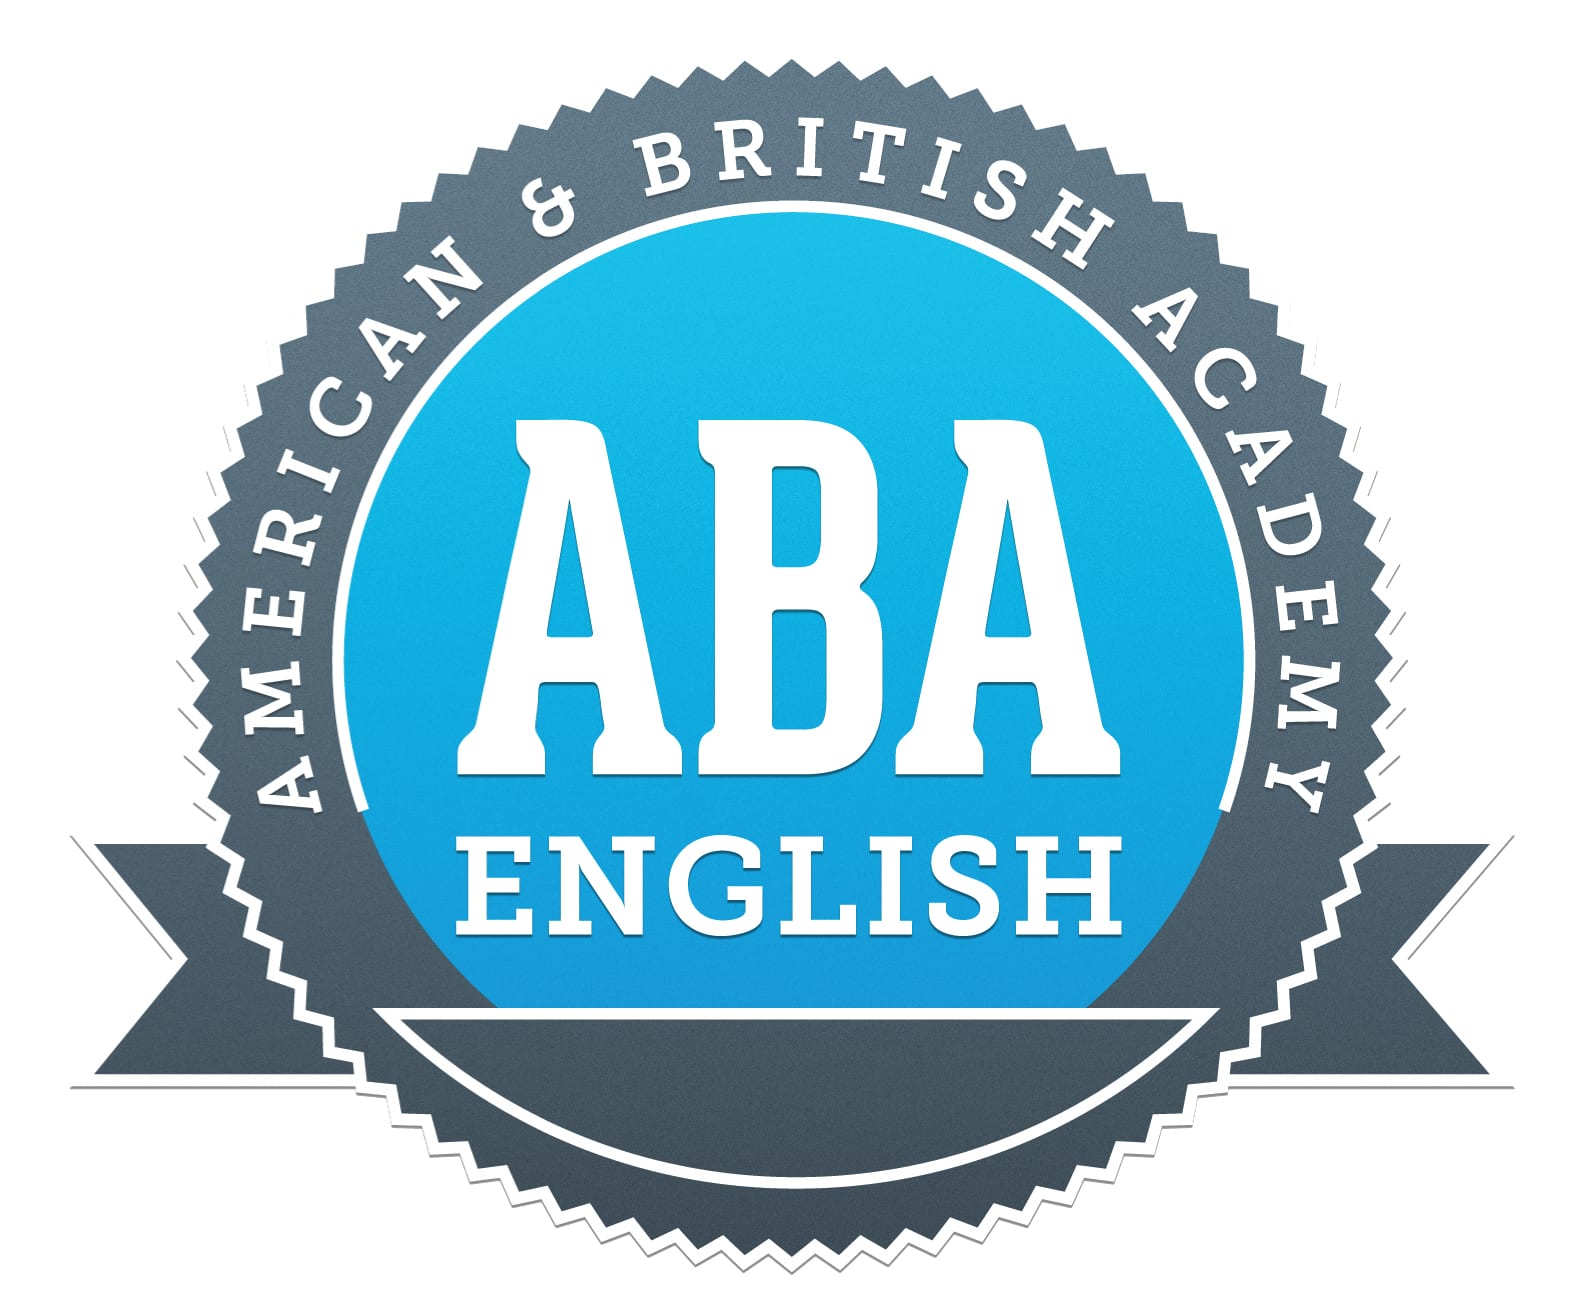 Aba English